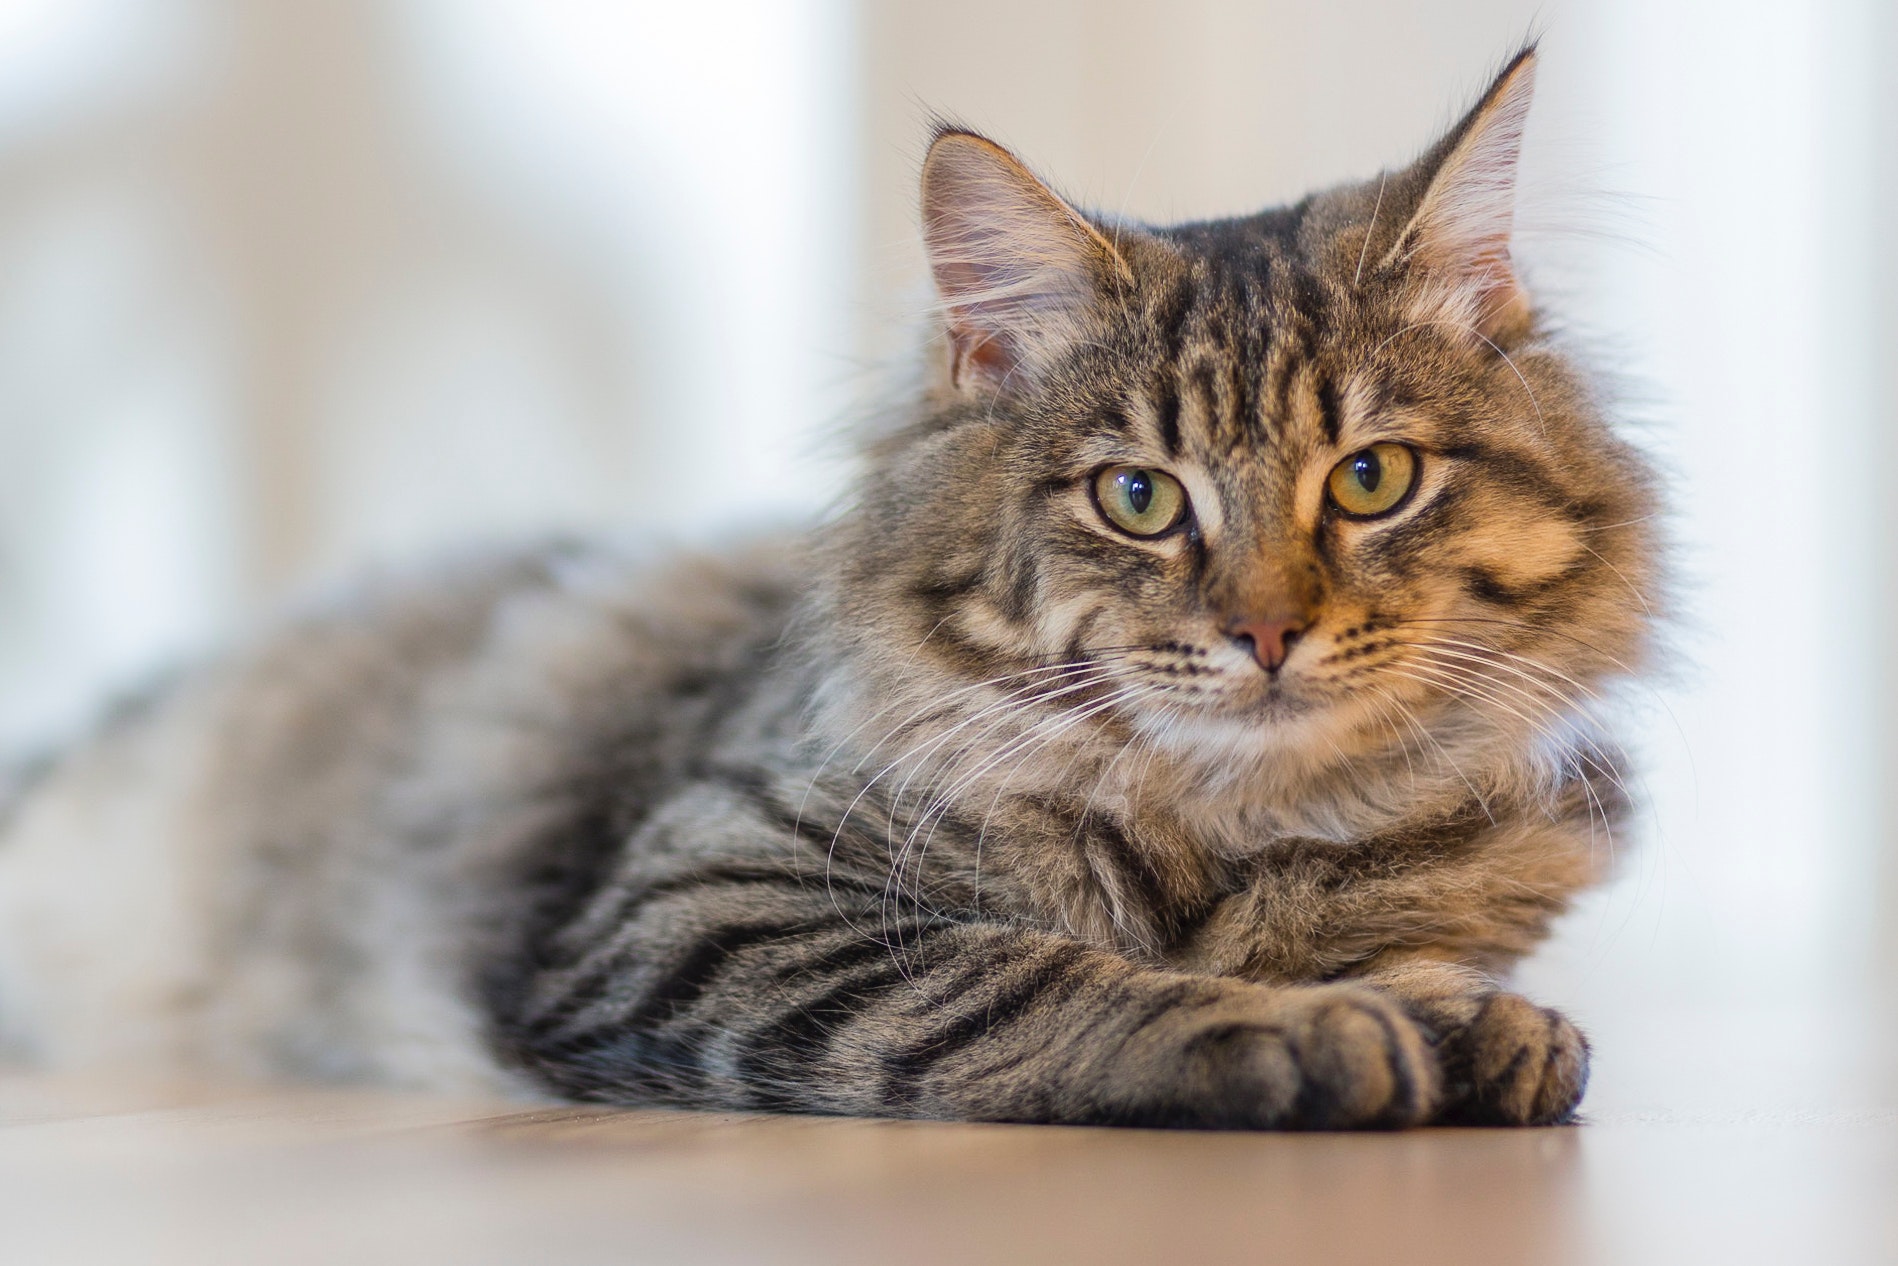 Pencinta Kucing Harus Paham Ciri-ciri dan Penyebab Kucing Rabies